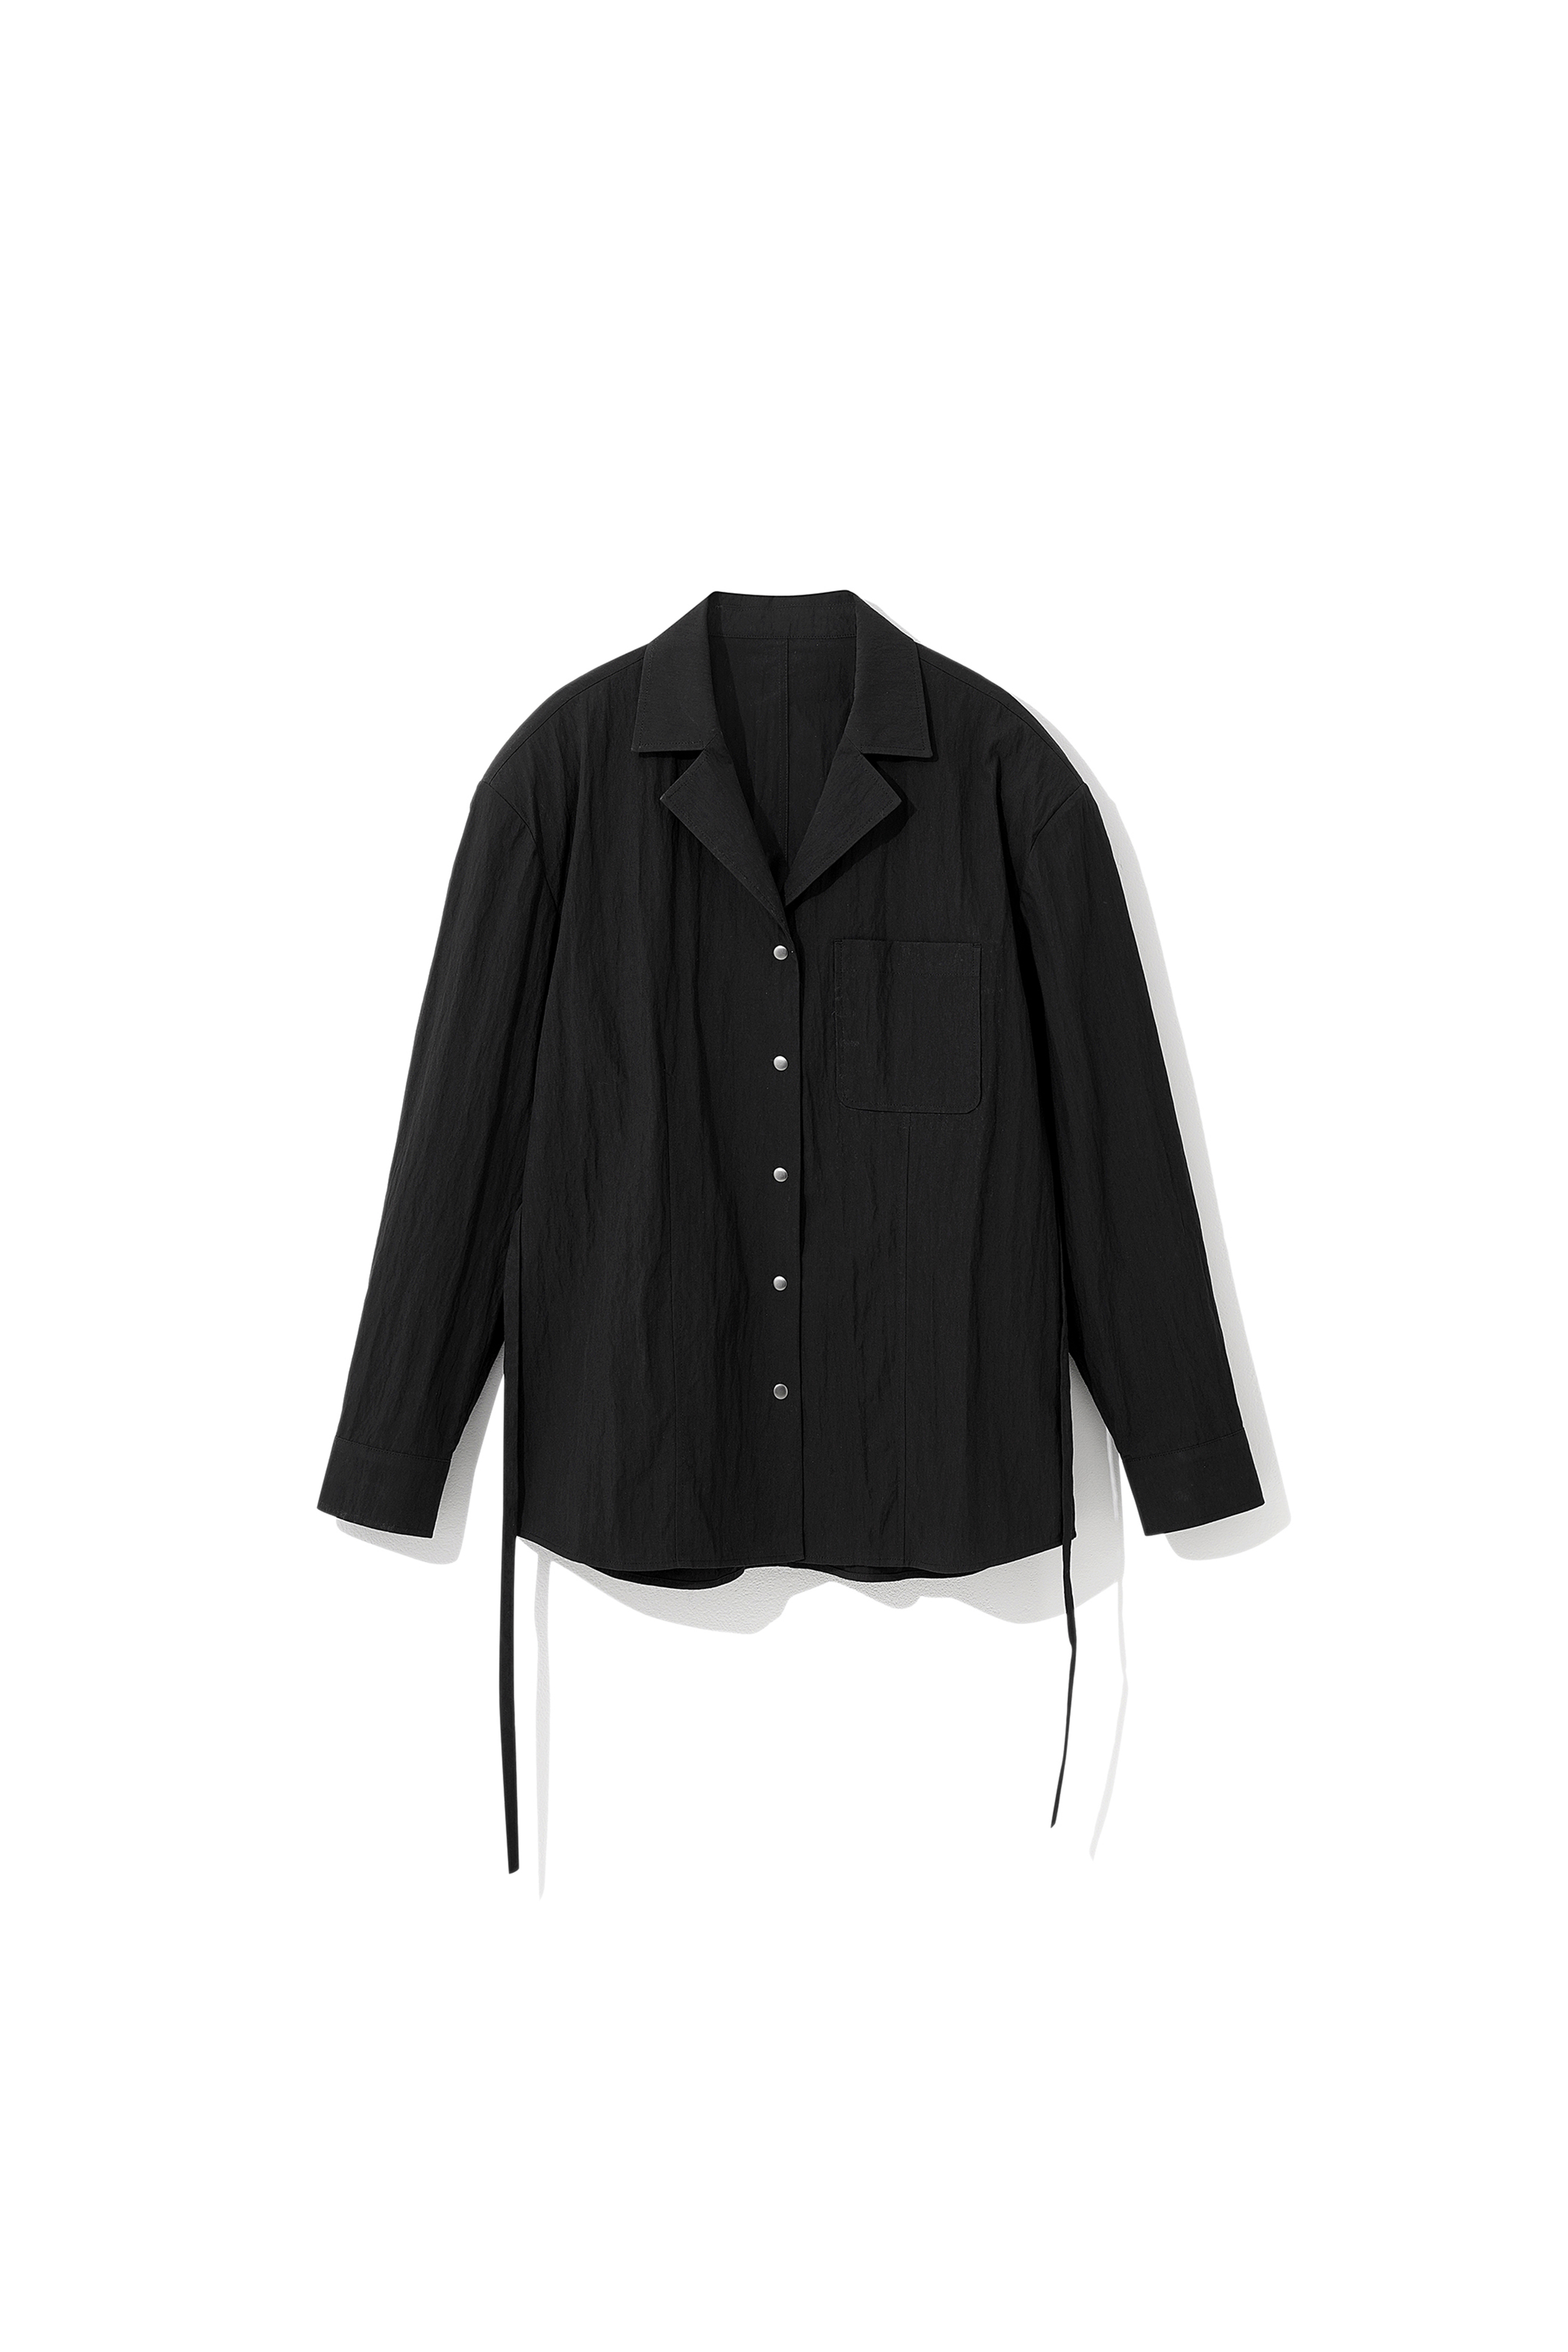 3rd) Kade 2-Way Open-Collar Shirts Black [3차 : 09.22(FRI) 예약 발송]